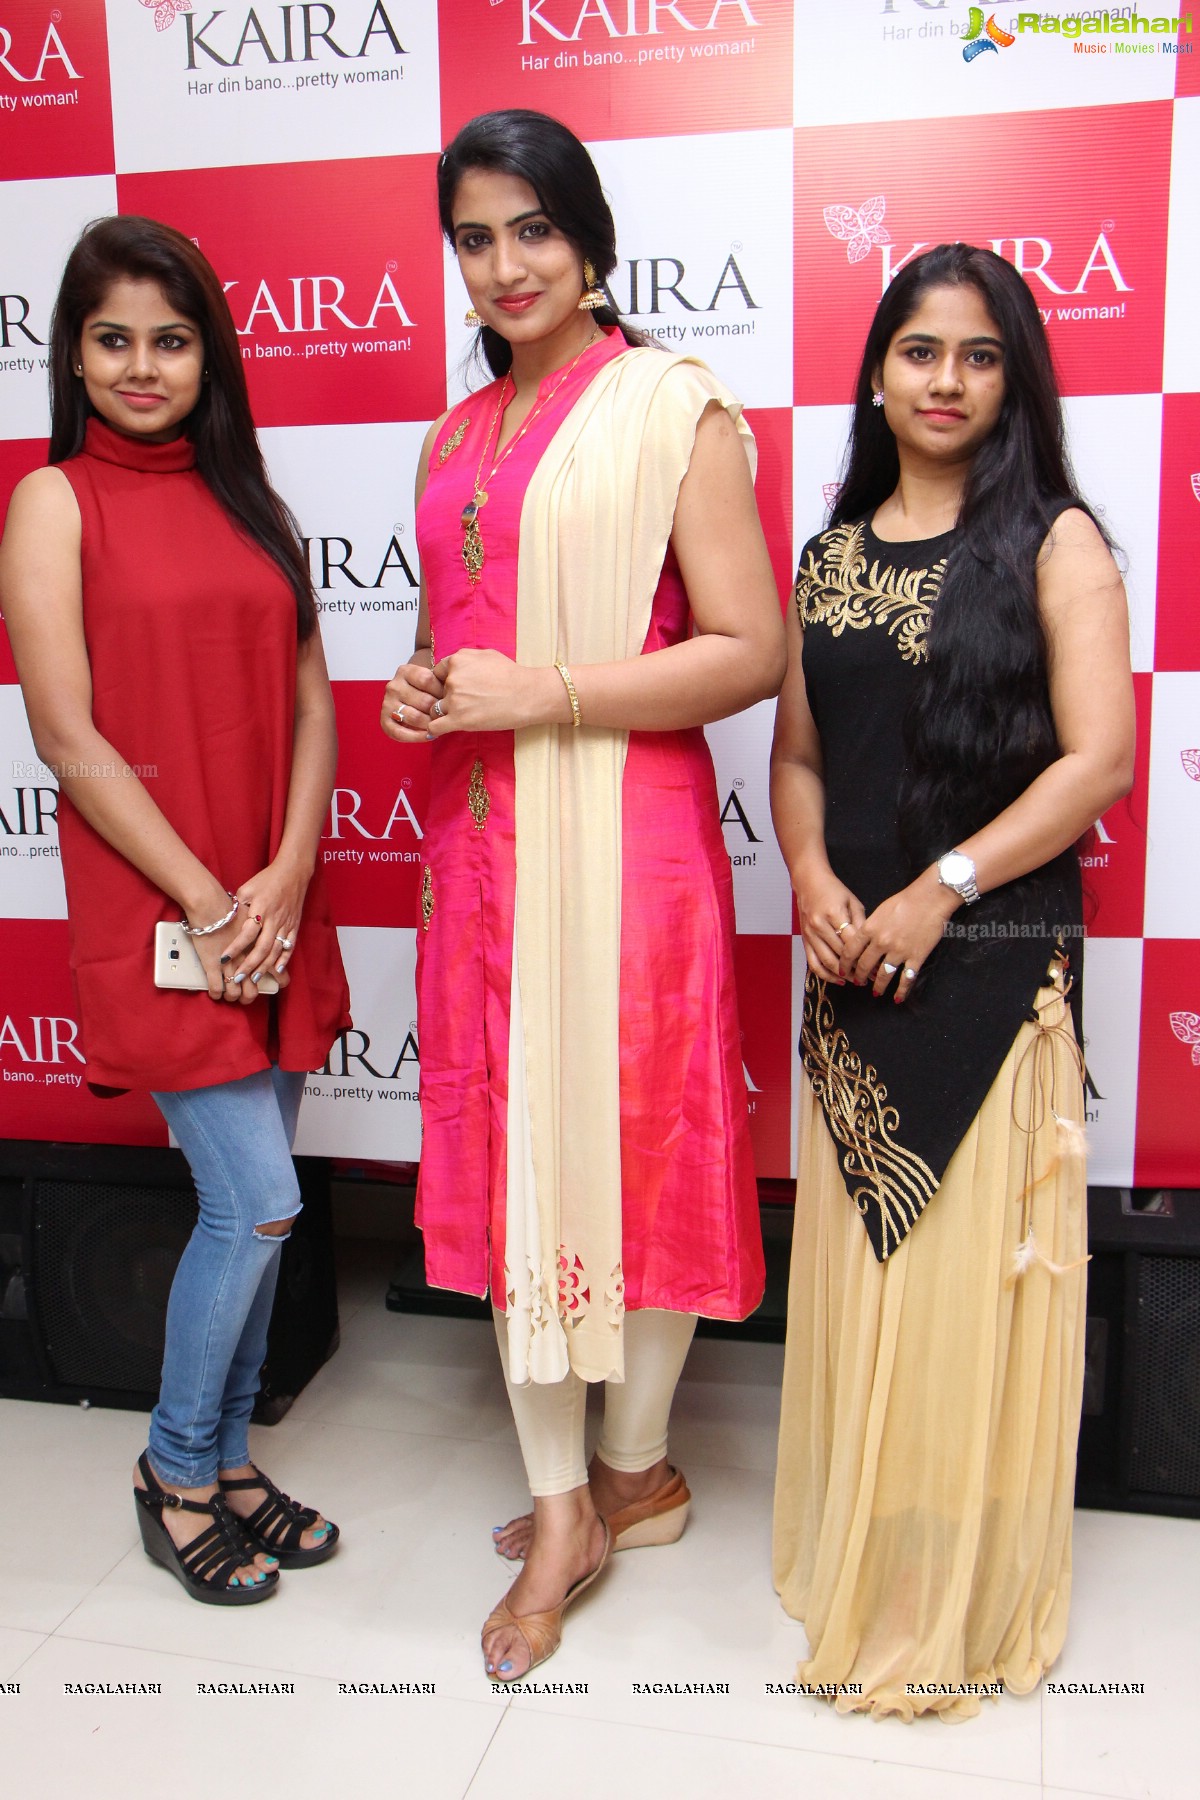 Ugadi Celebrations and Launch of Festive Collection and Fashion Showcase at Kaira, Malkajgiri, Hyderabad